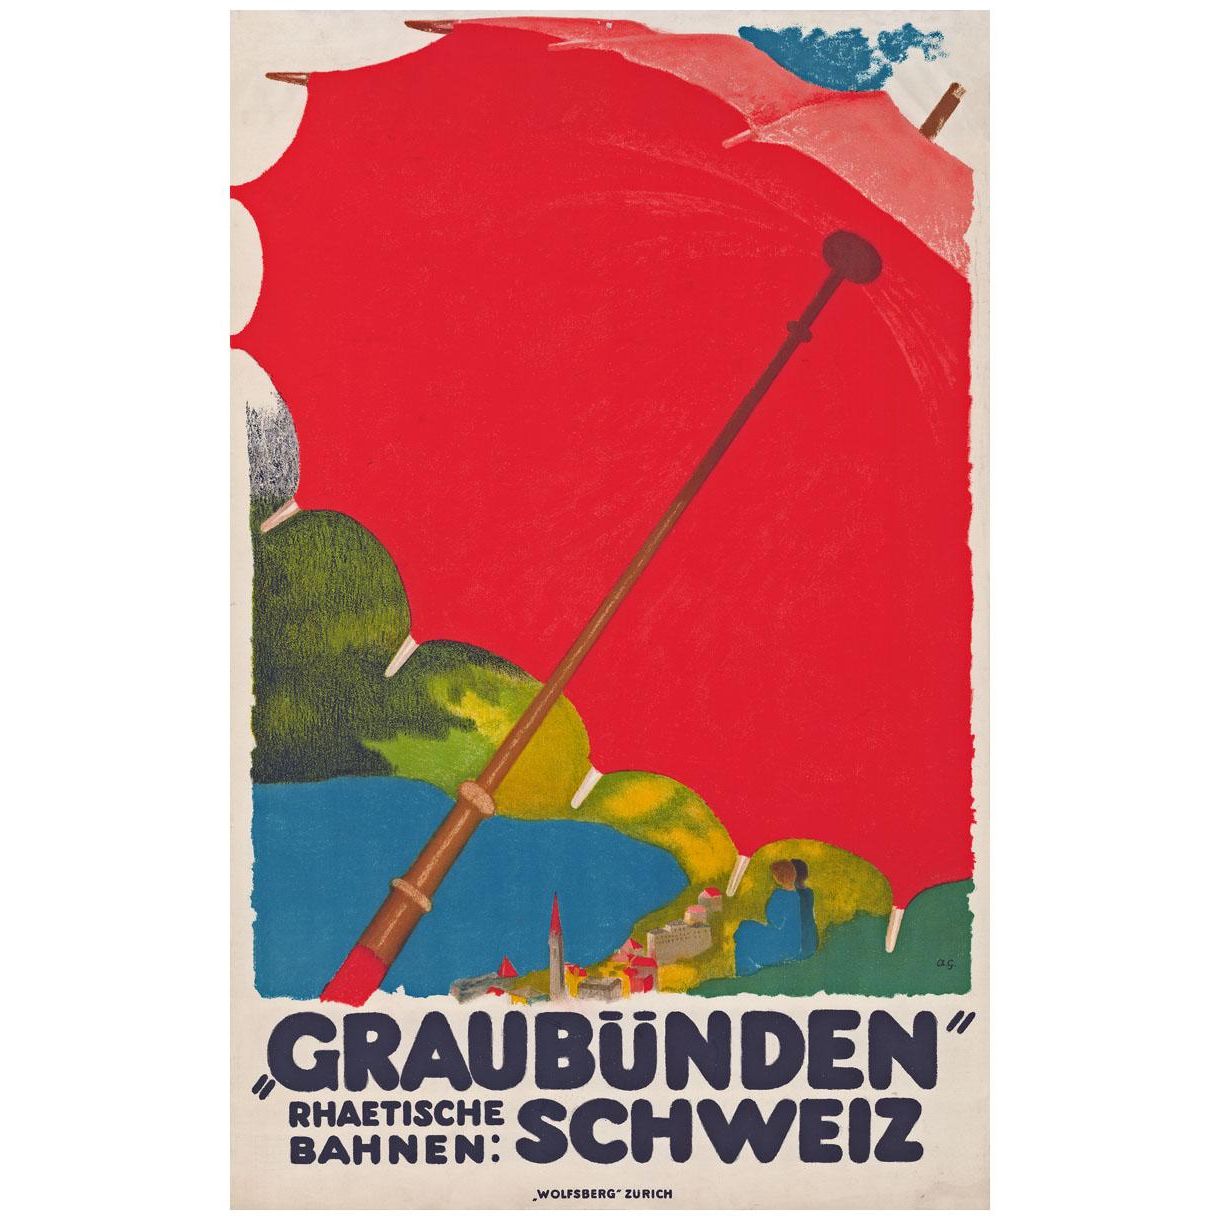 Augusto Giacometti. Graubunden. Poster. 1924. Basel School of Design